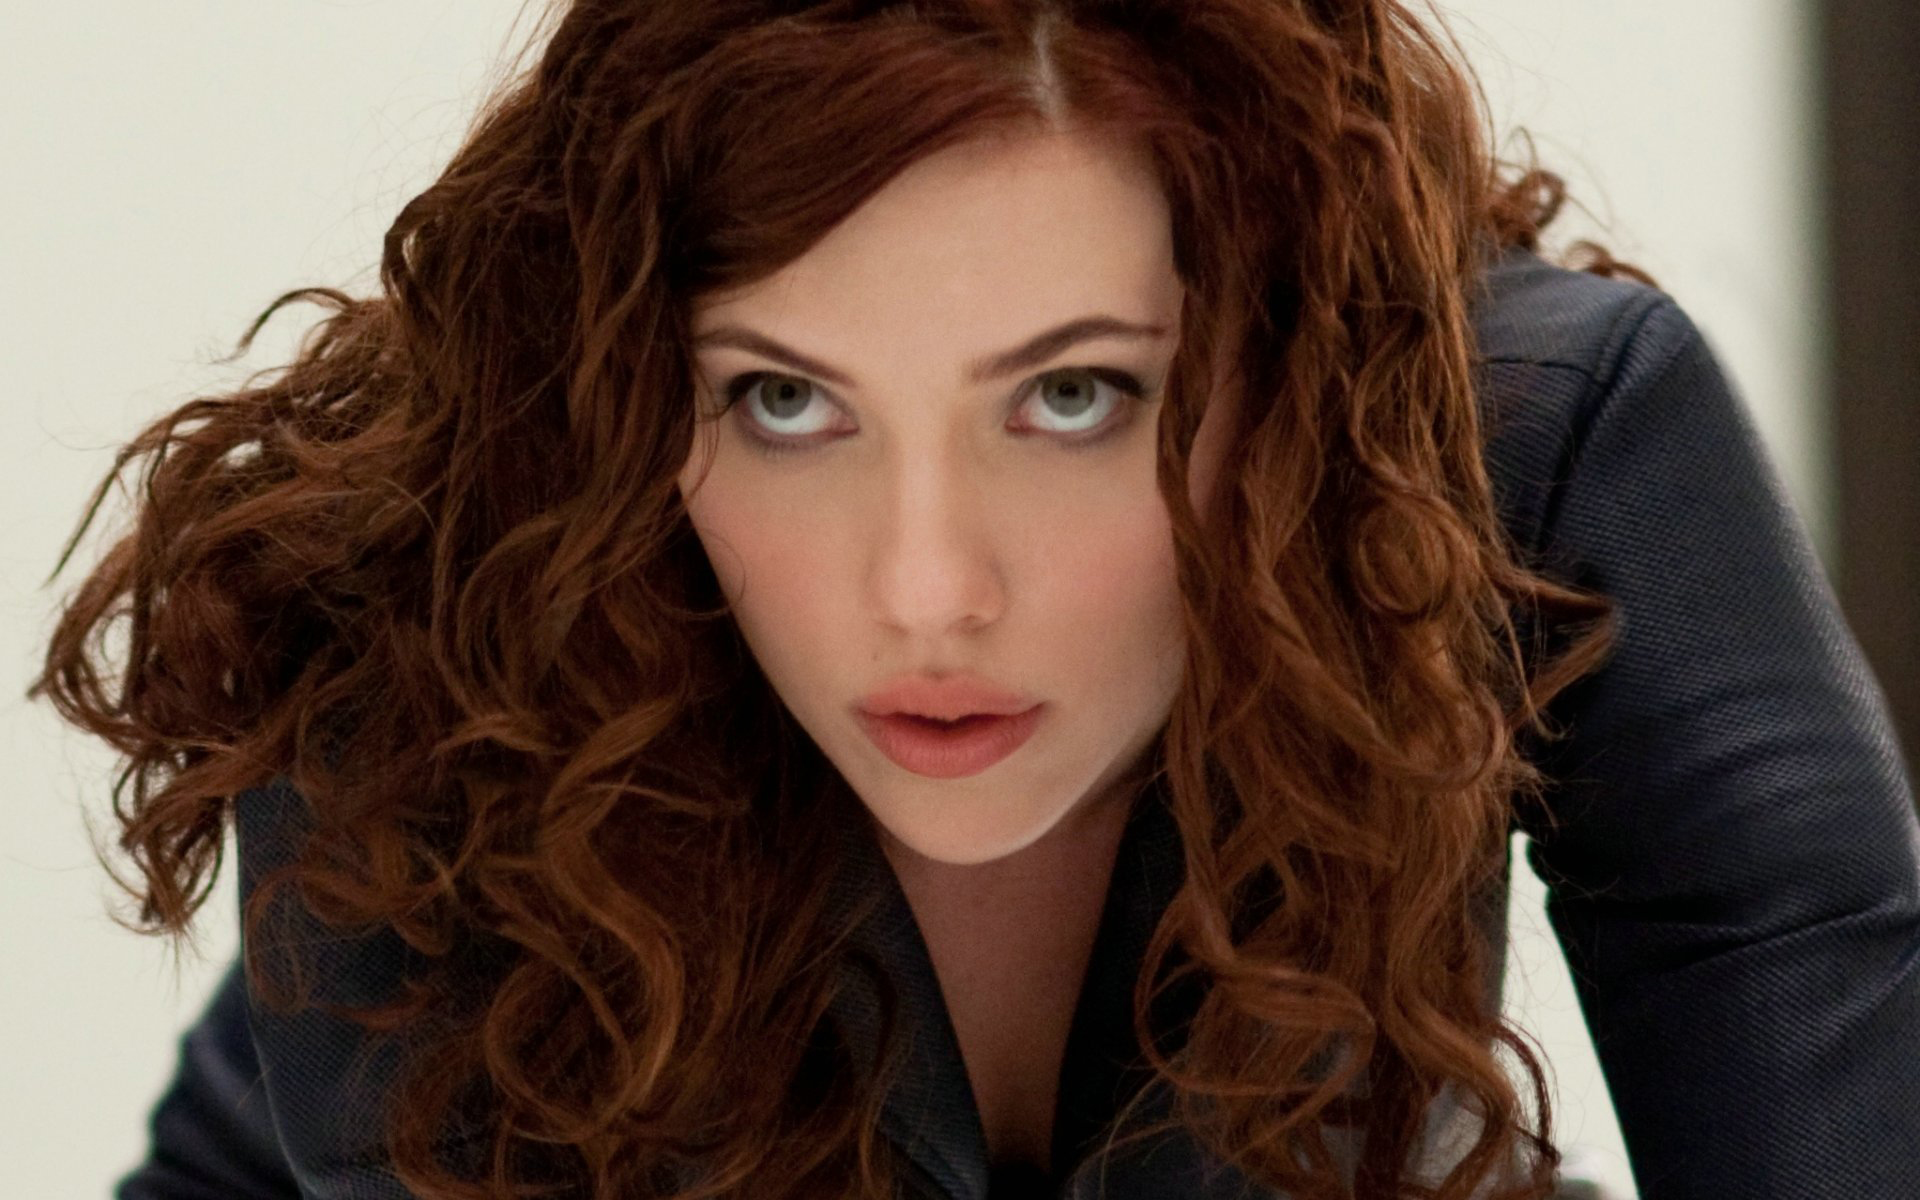 Scarlett Johansson as 'Black Widow' in the new movie 'The Avengers.'